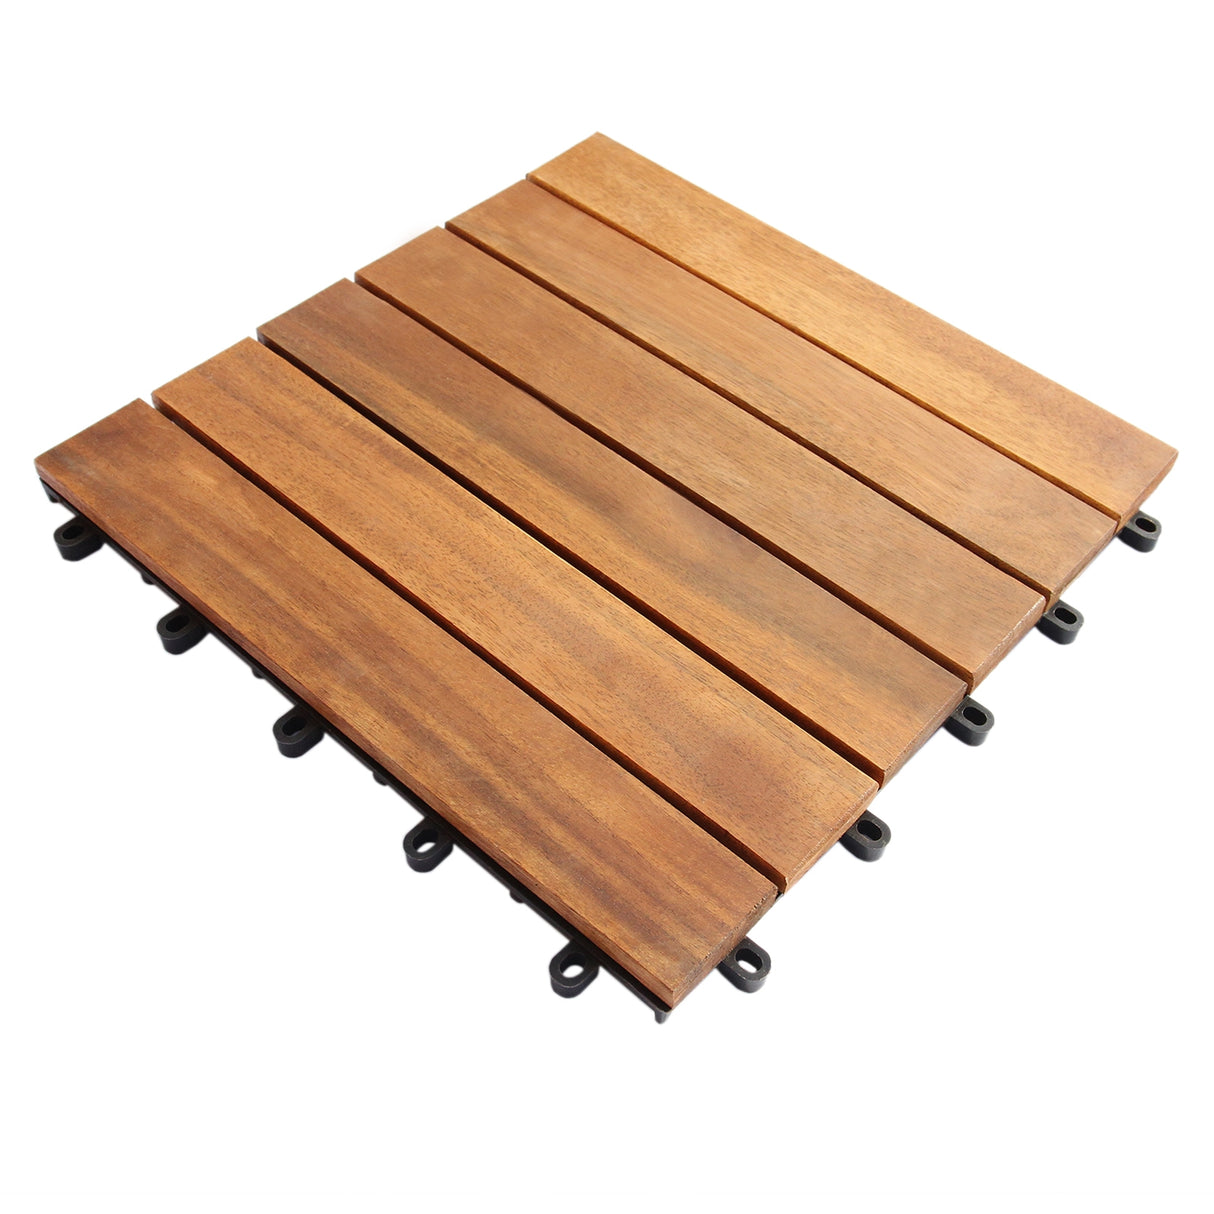 Wooden Decking Tiles